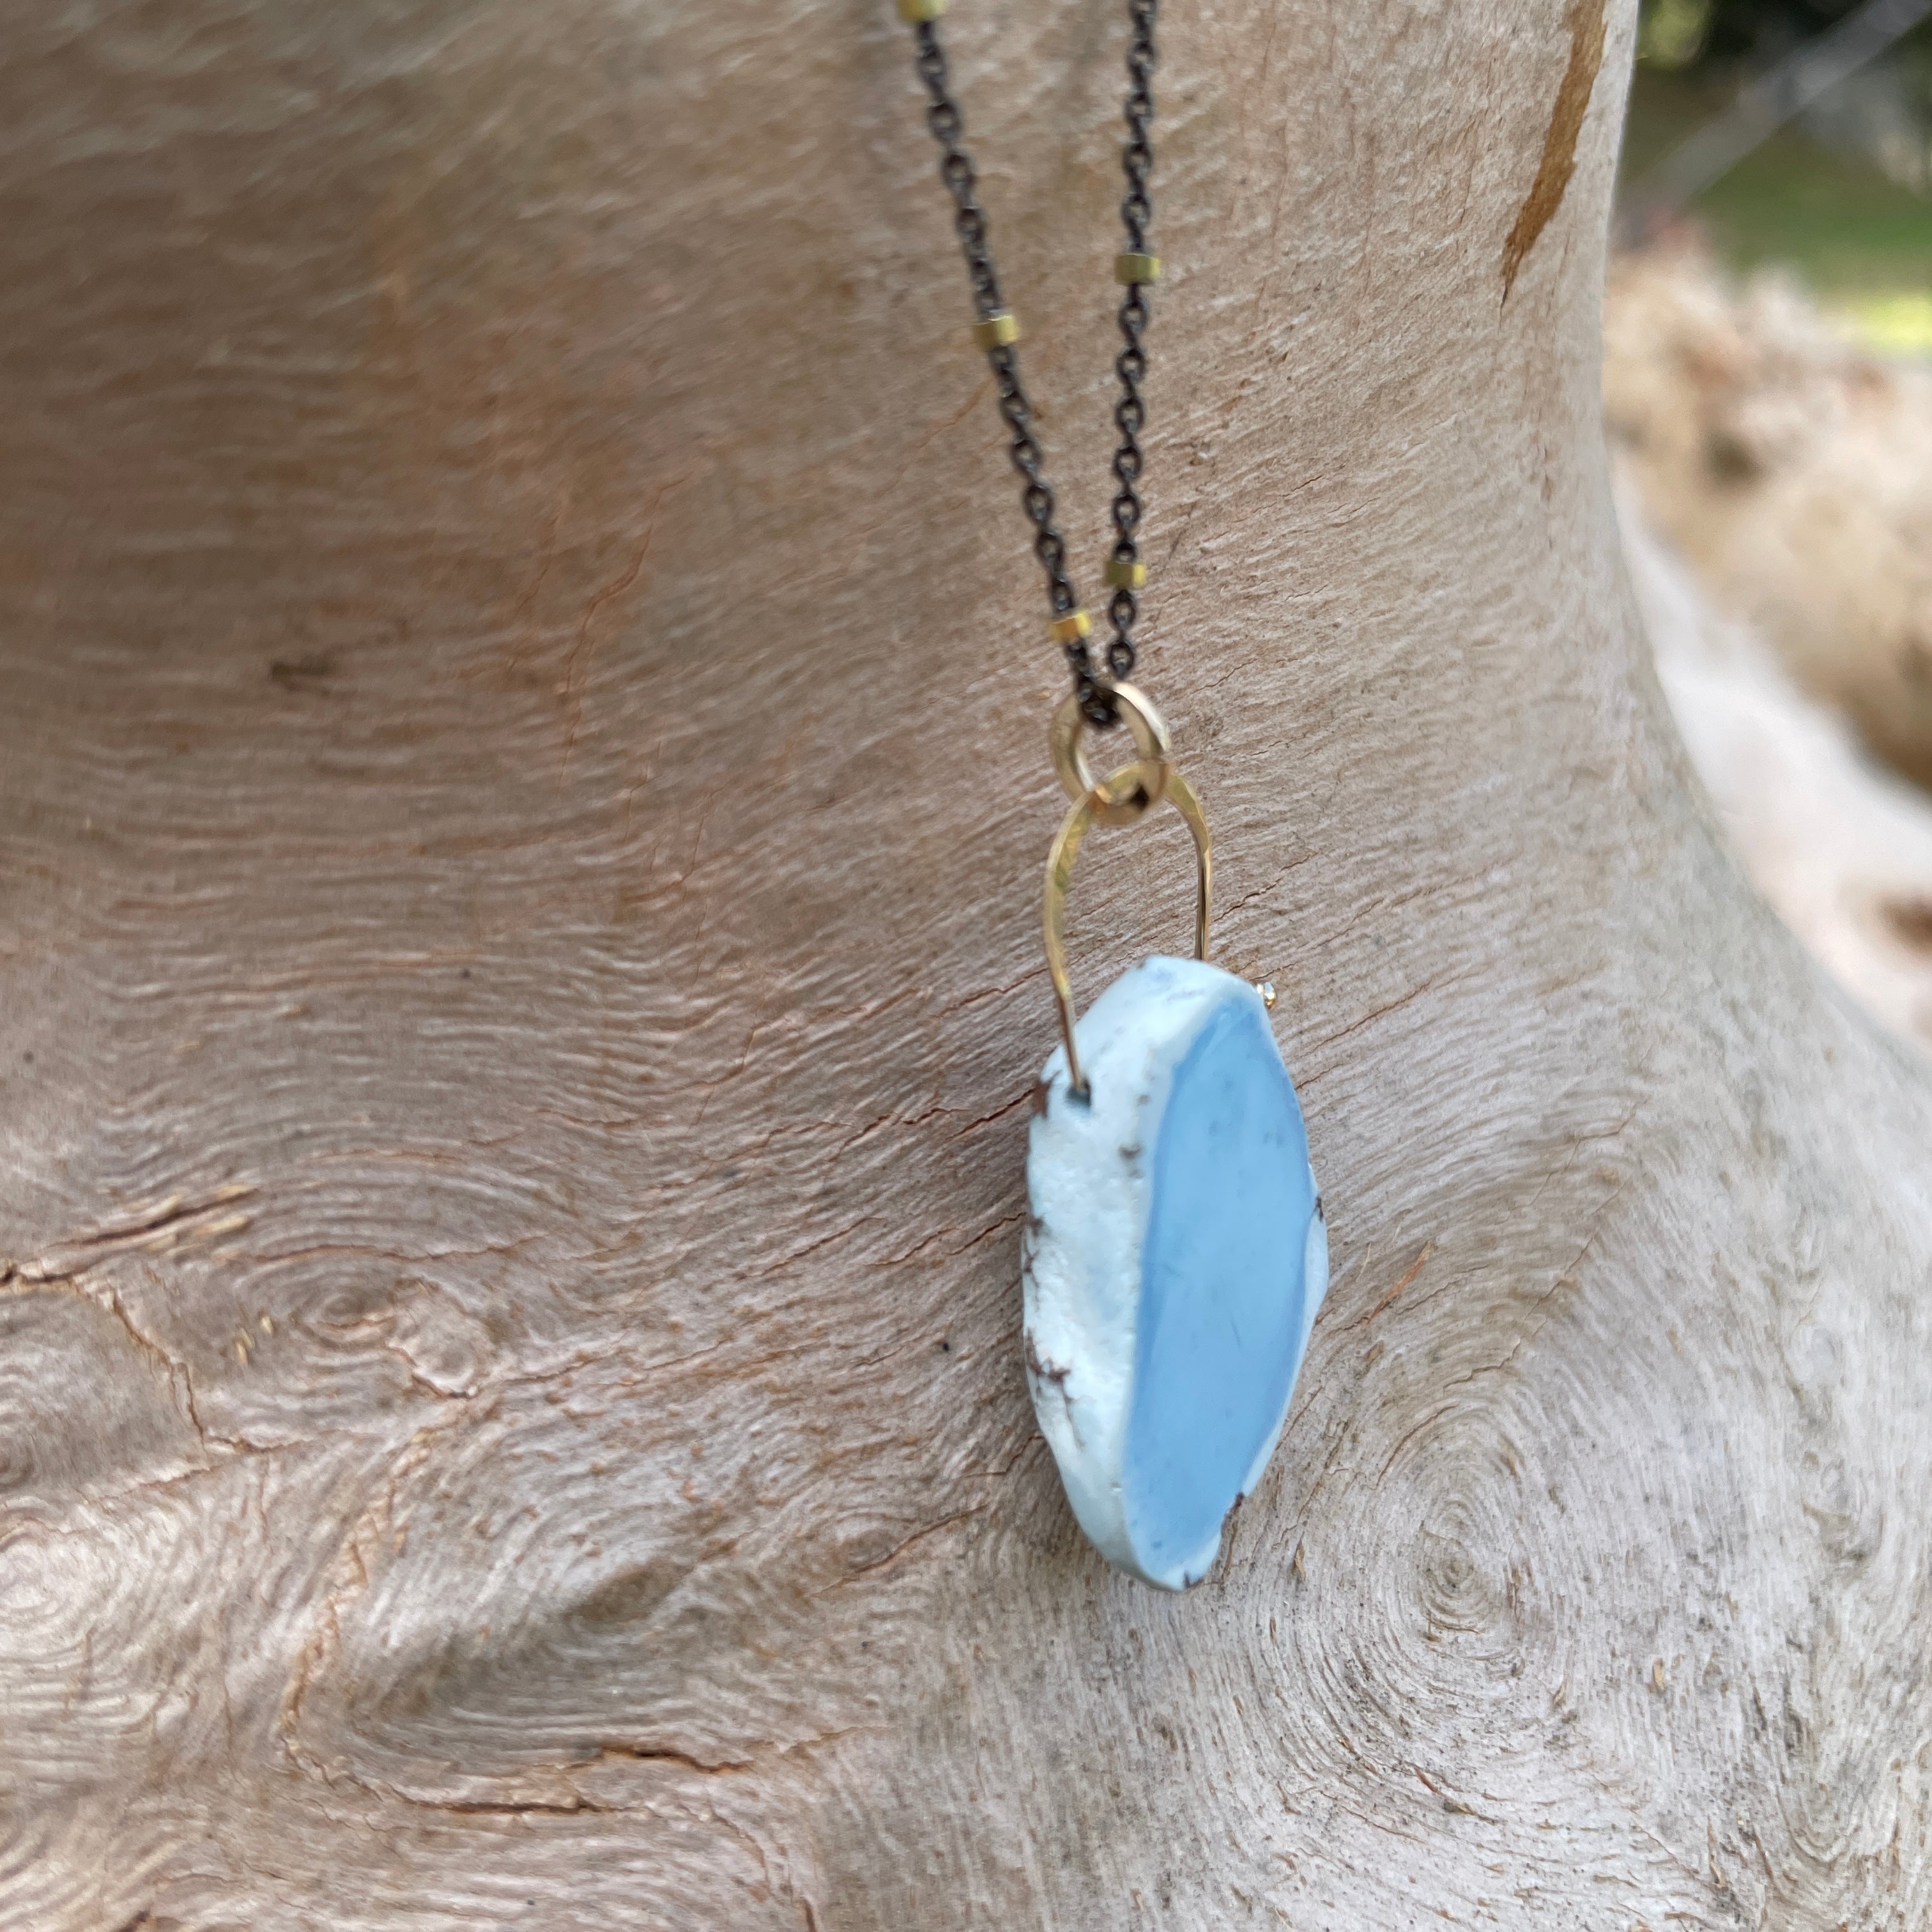 Stirrup Golden Hills turquoise 14kygf necklace-serena kojimoto studio